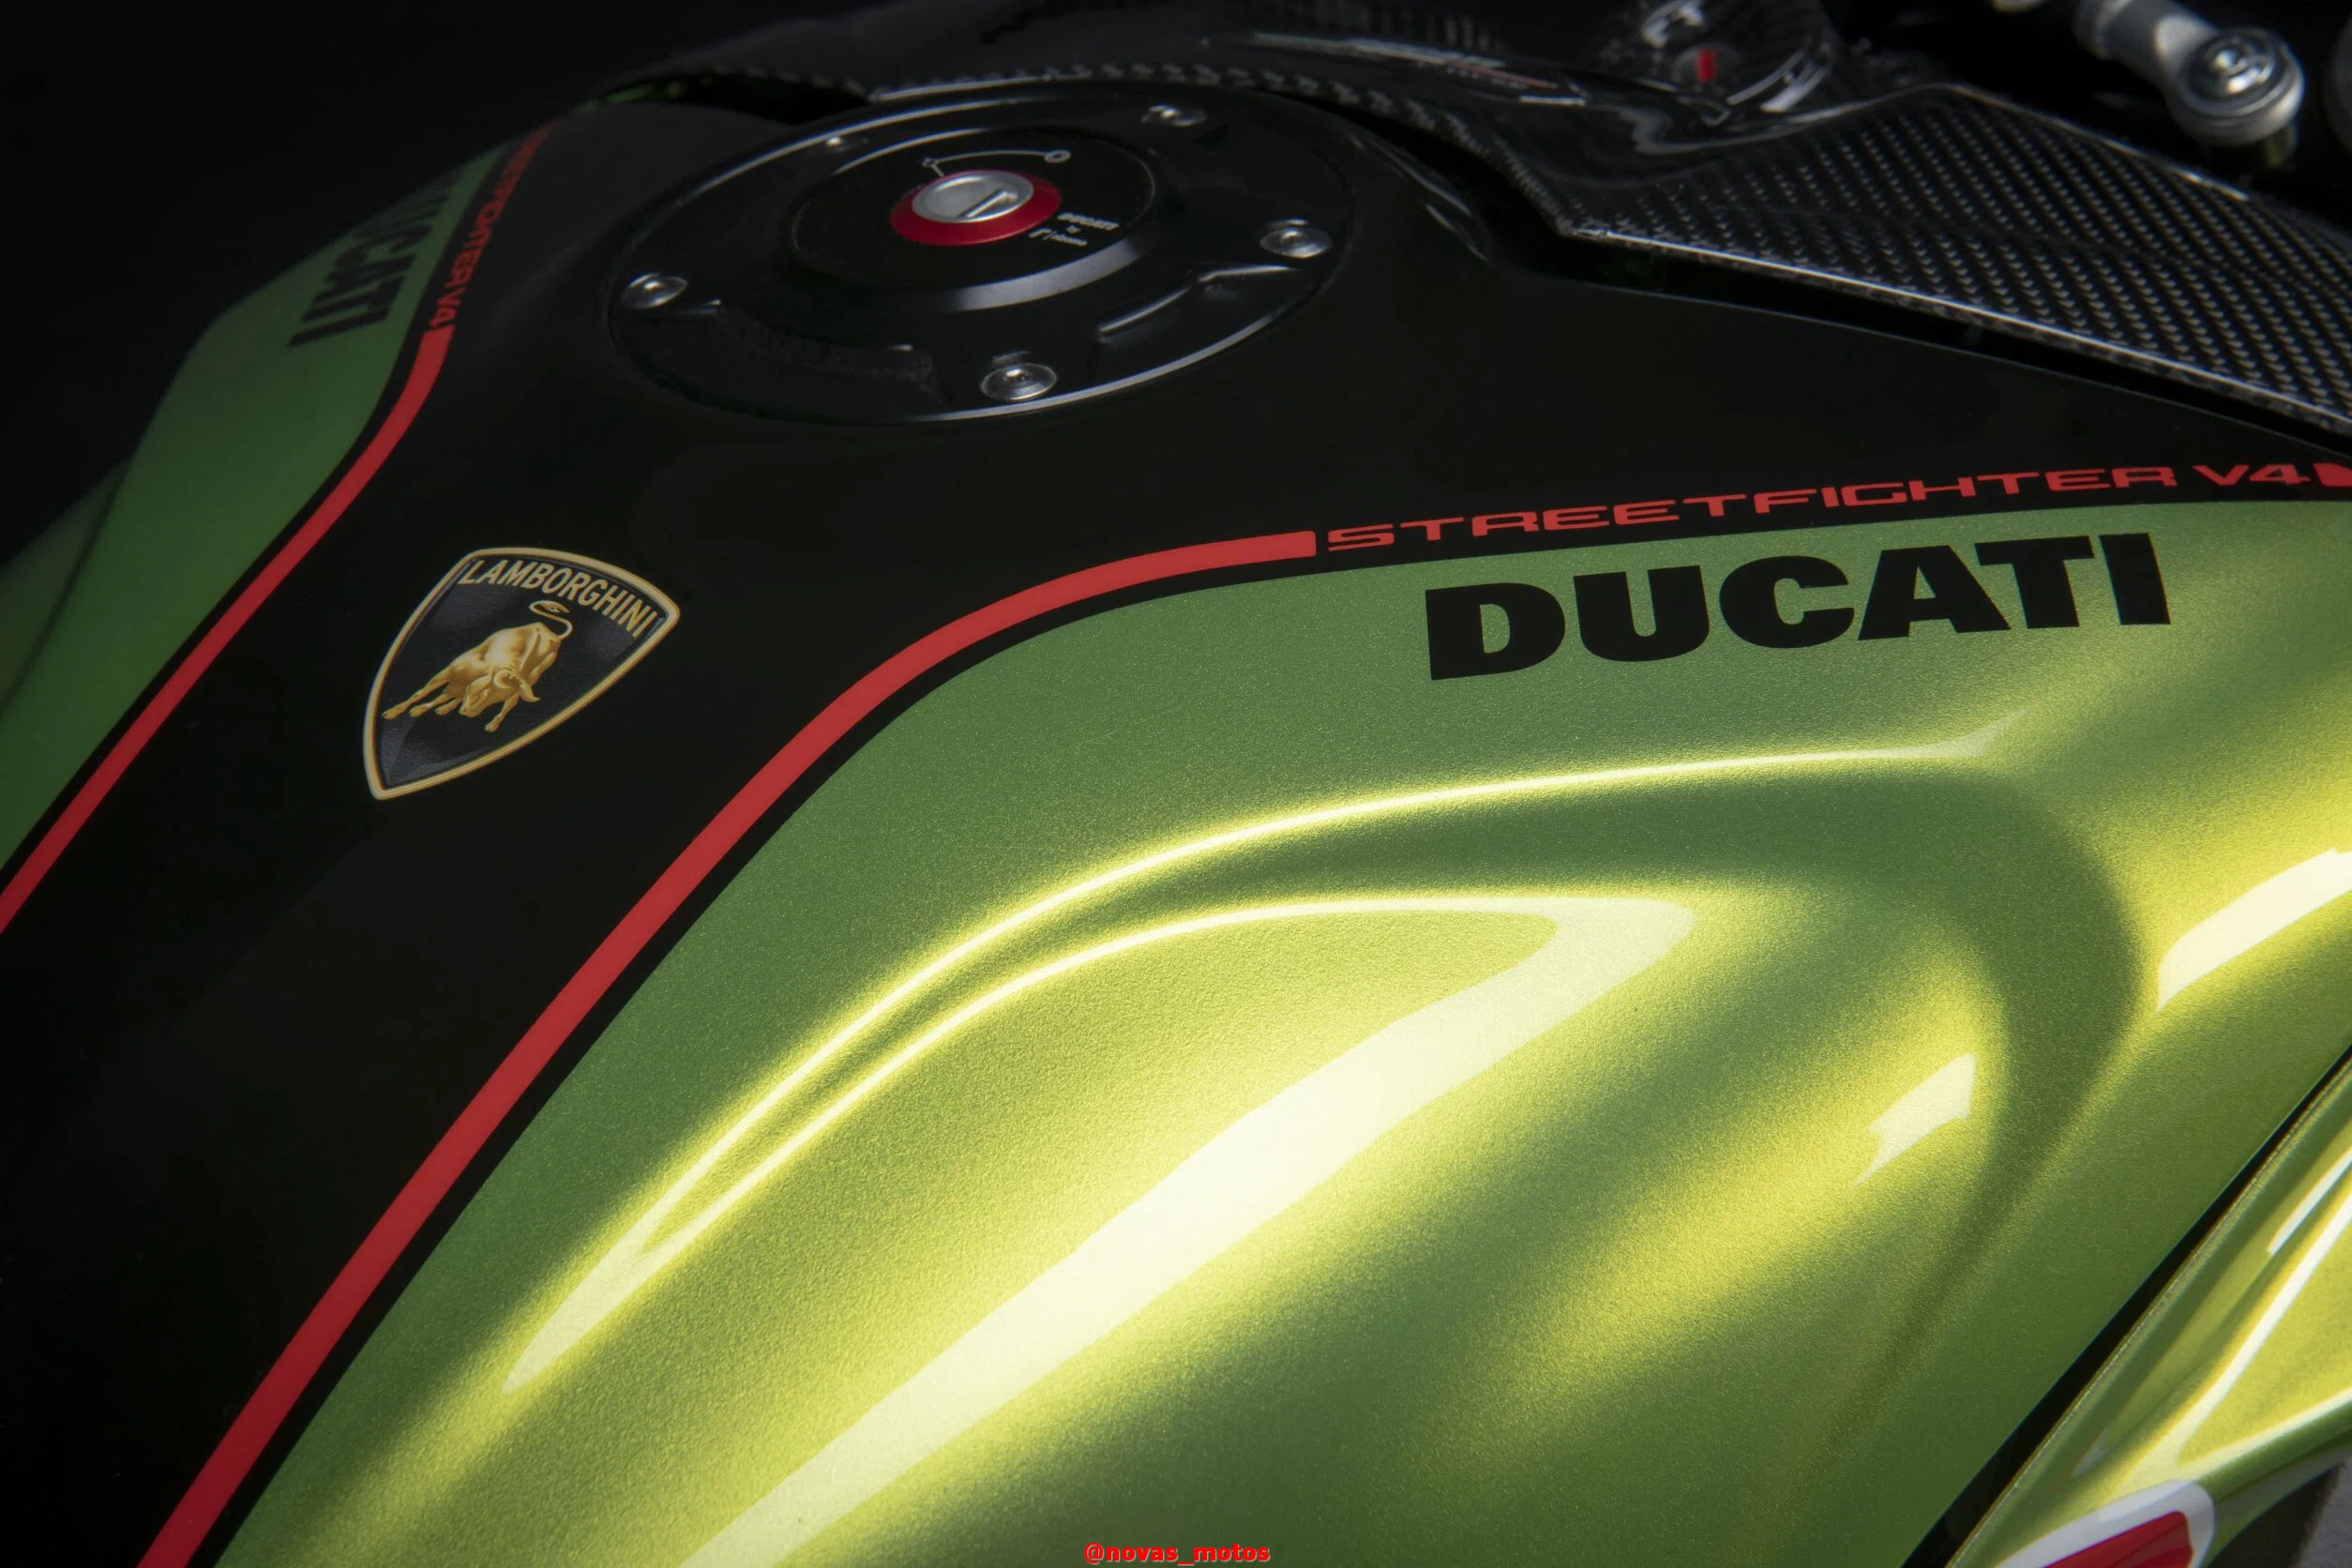 tanque-Ducati-Streetfighter-V4-Lamborghini-novas-motos Ducati lança edição exclusiva da moto Streetfighter V4 inspirada na Lamborghini